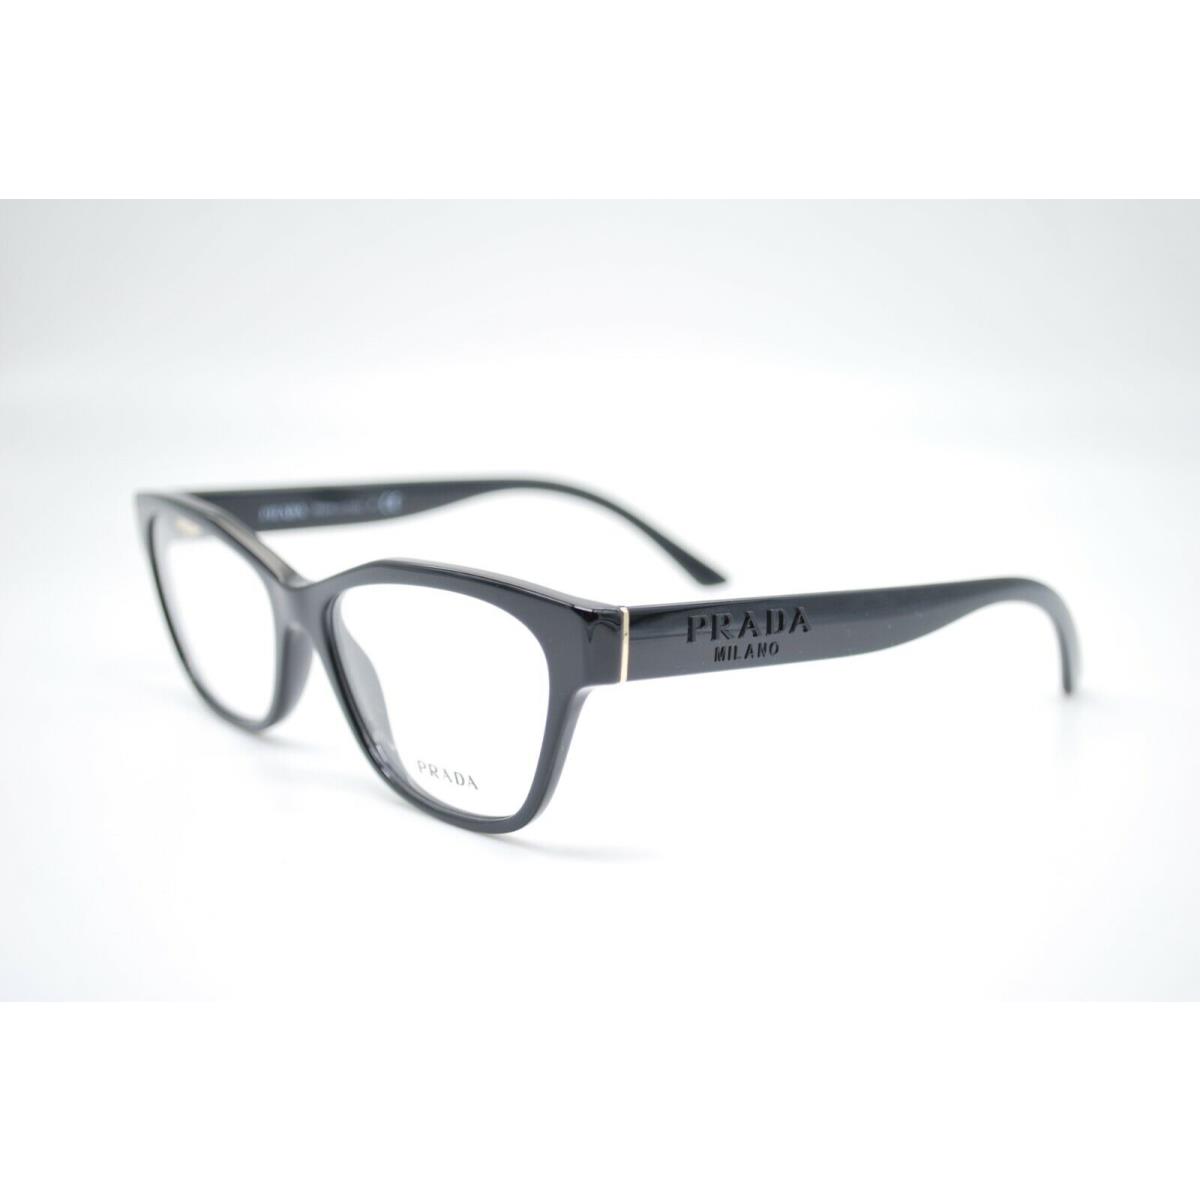 Prada eyeglasses VPR - Black Frame 0